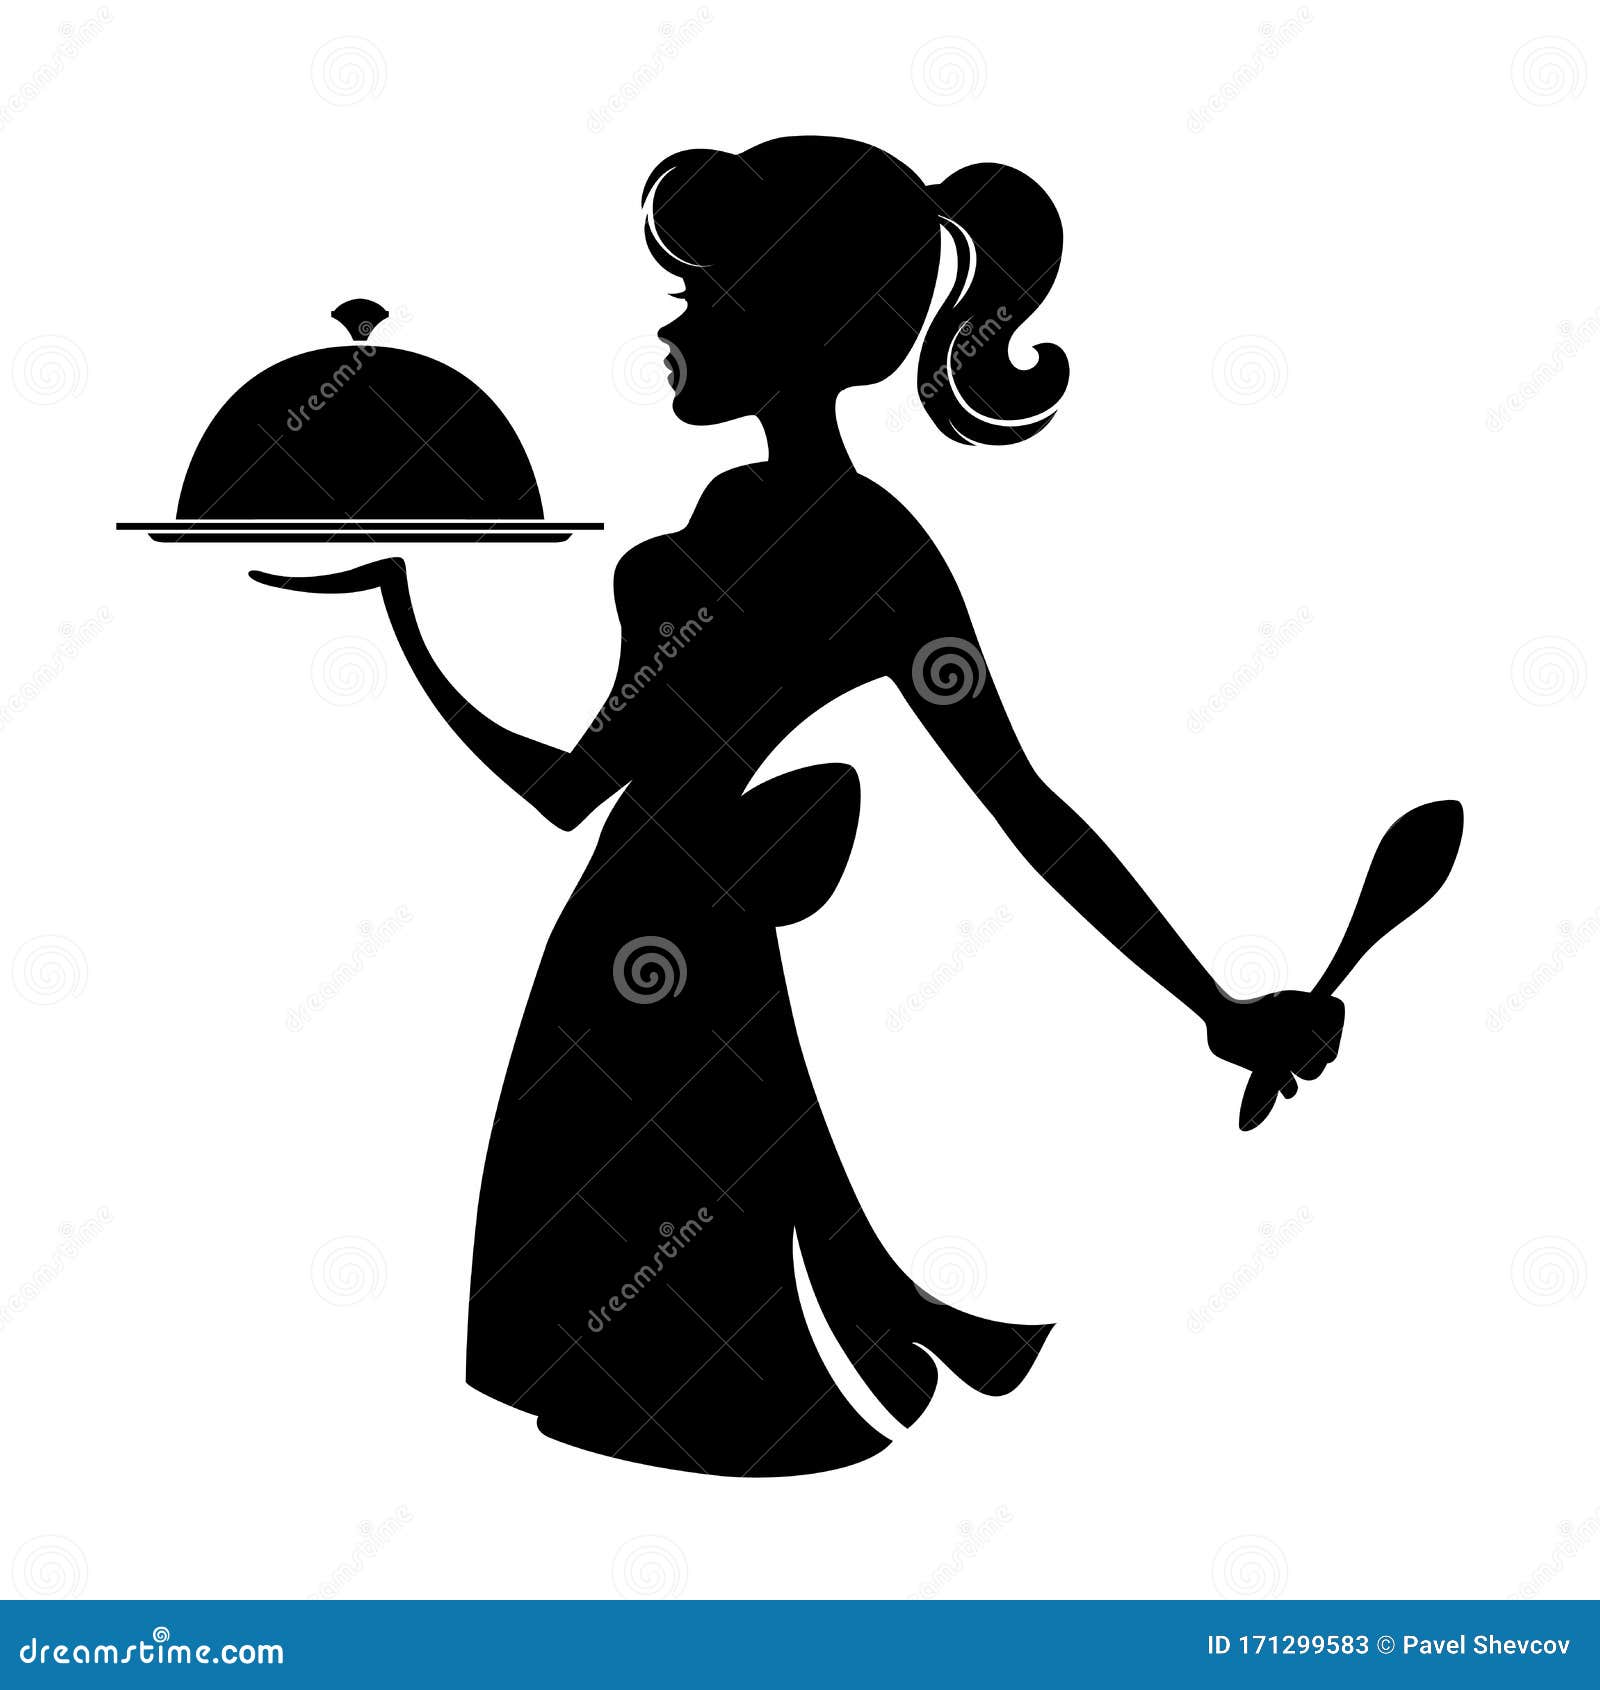 waitress silhouette